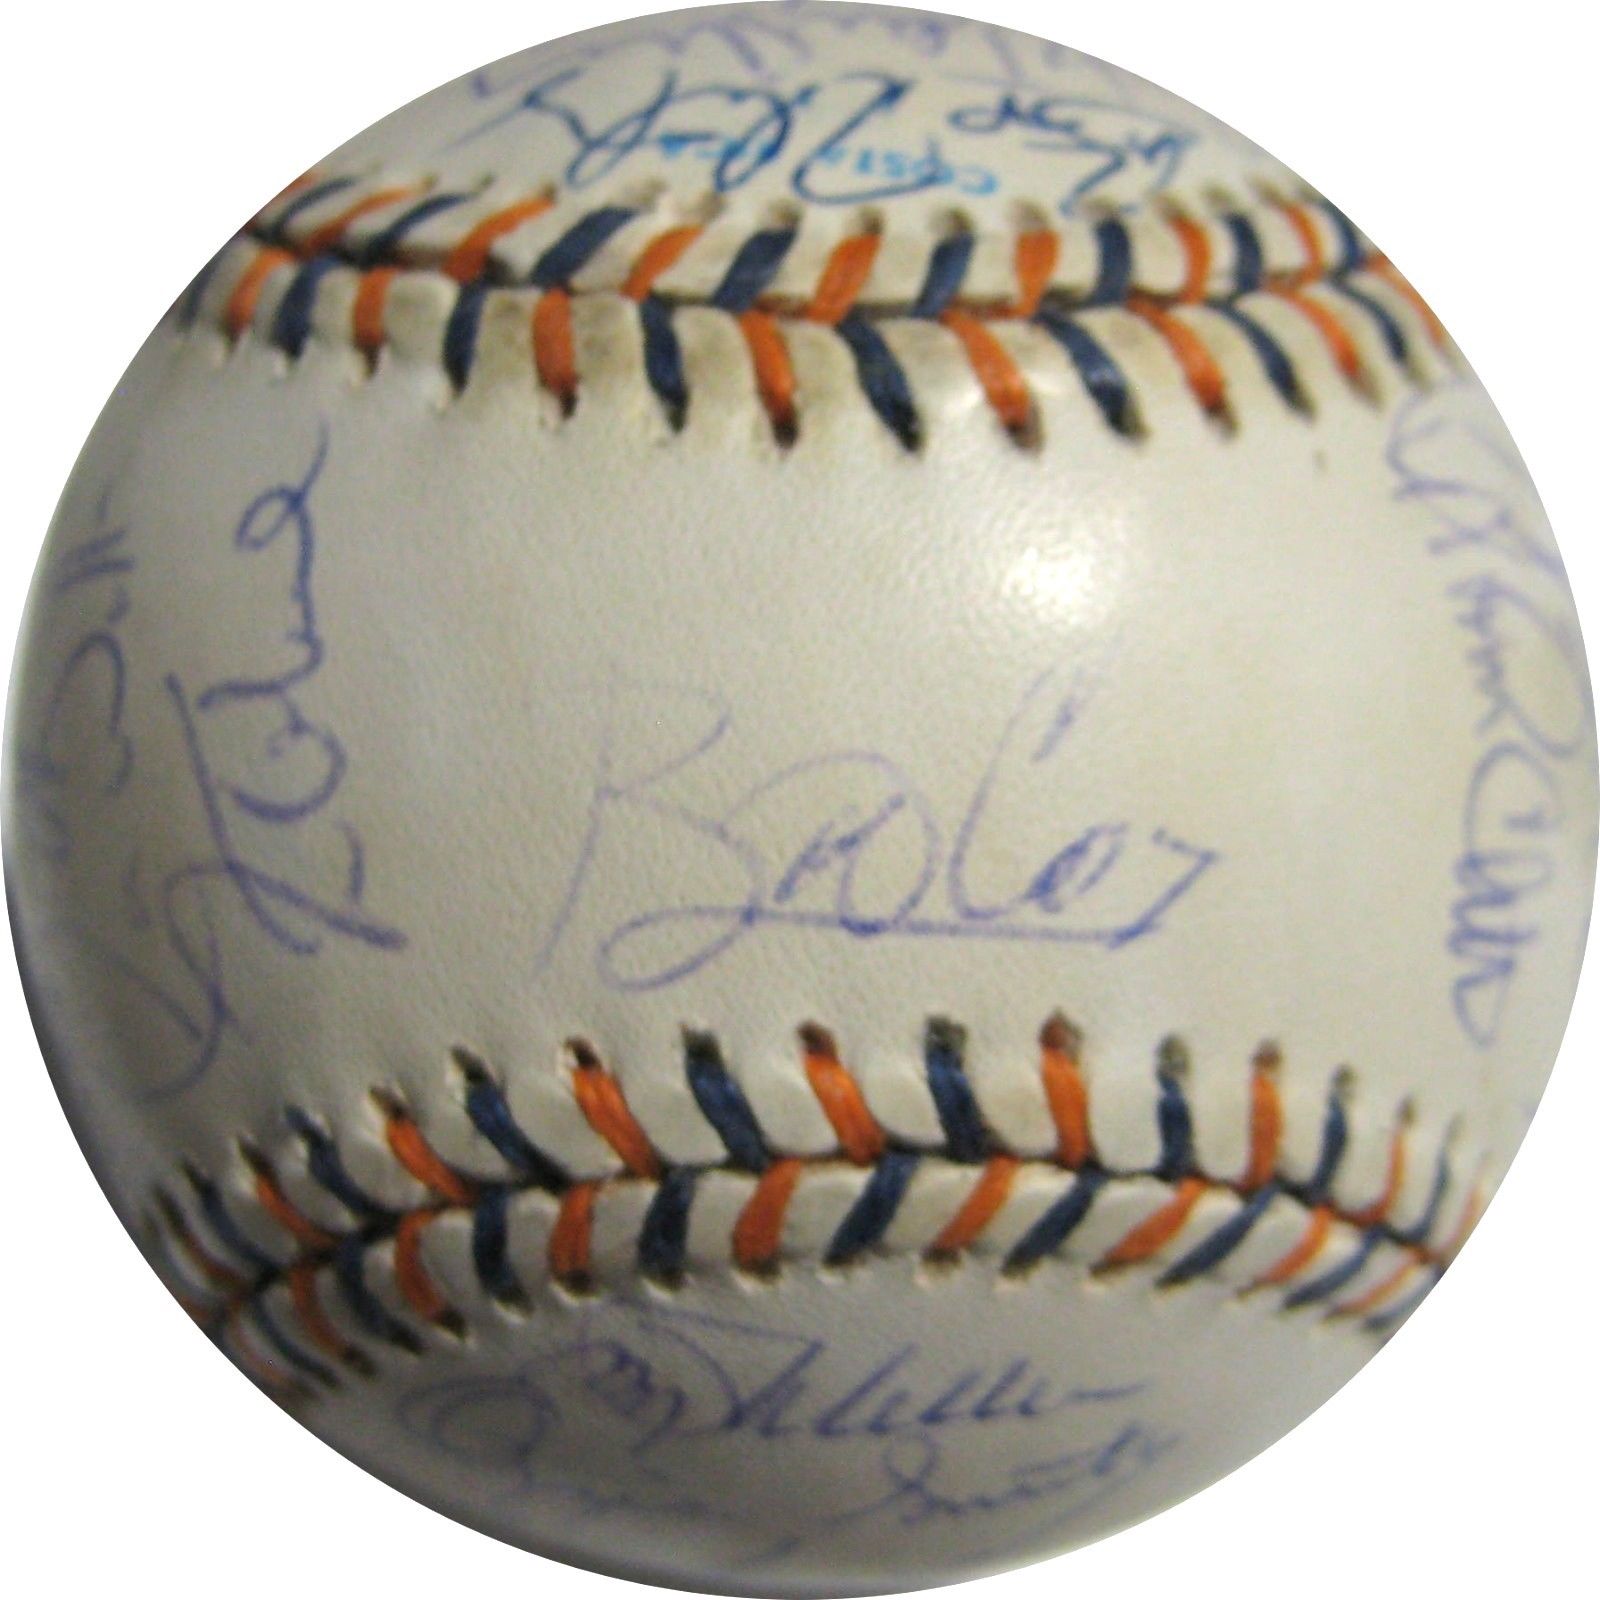 1992 National League All Star Team Signed Baseball 29 Autos Maddux Sandberg PSA